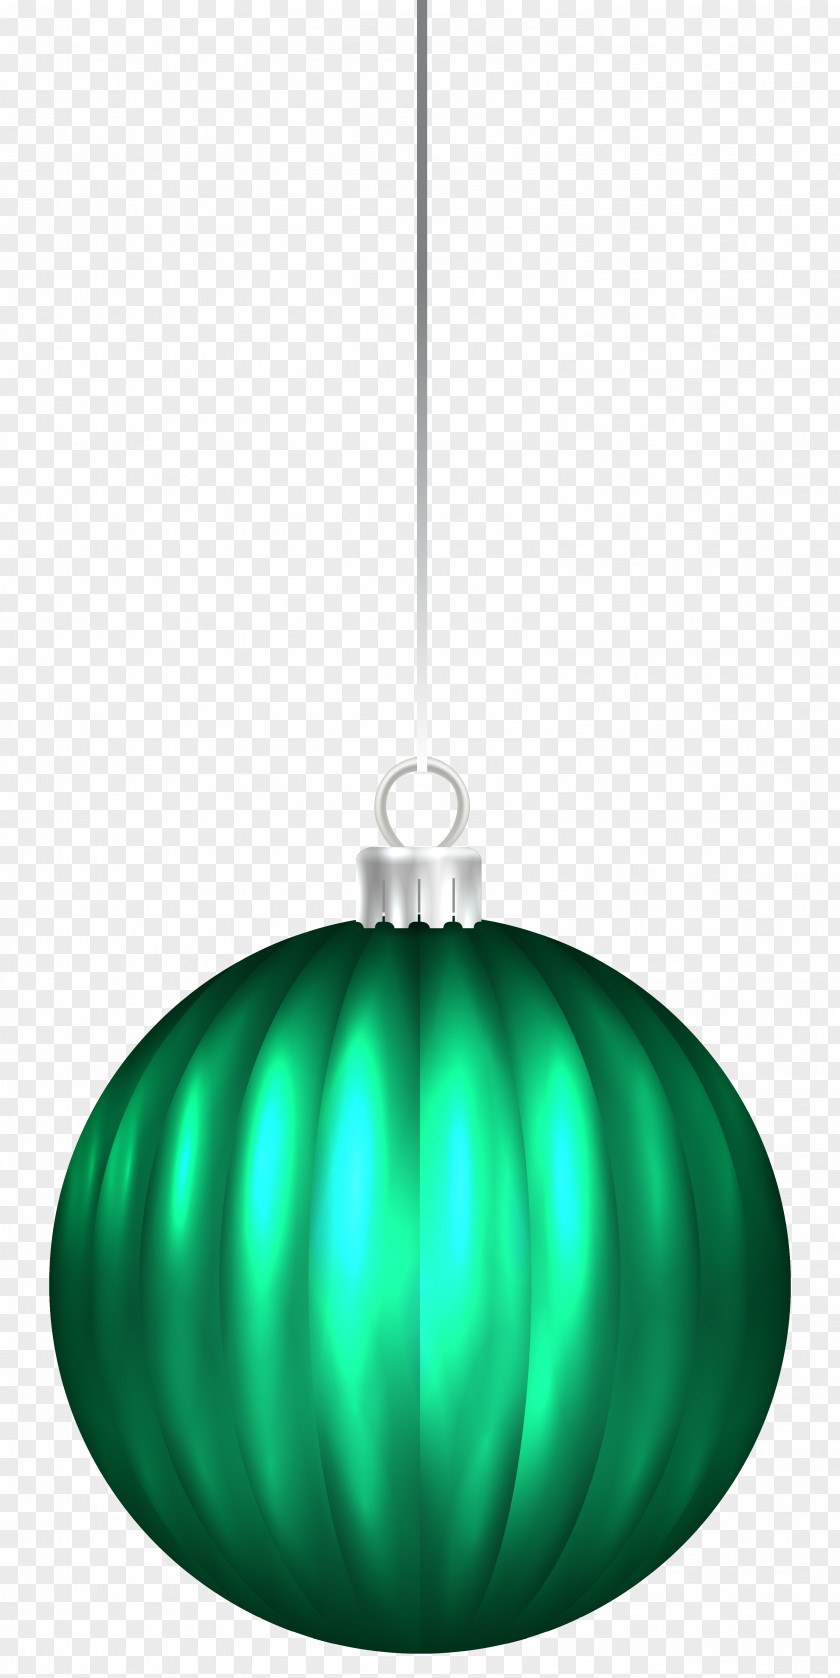 Green Christmas Ball Ornament Clip Art Image Lighting Illustration PNG